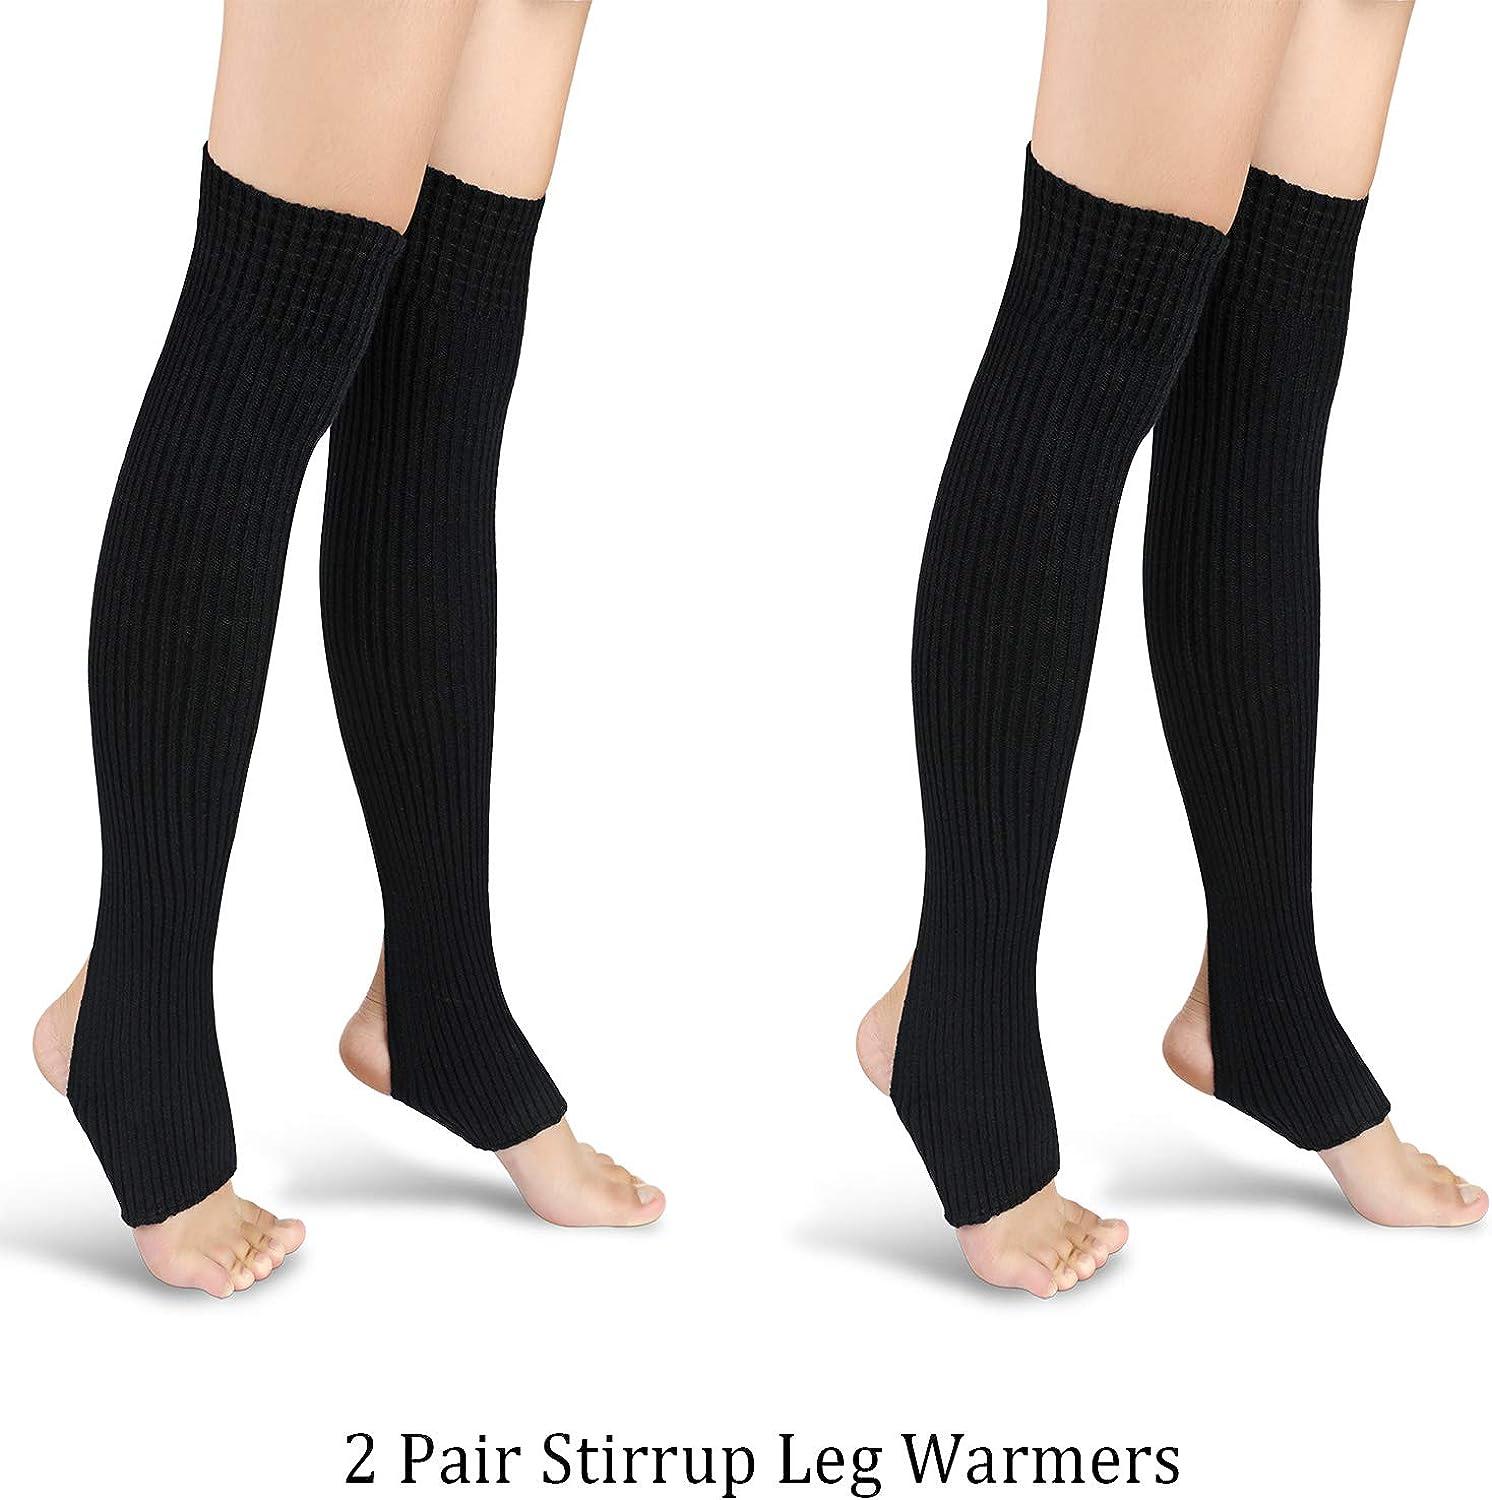 2 Pairs Stirrup Leg Warmers Straight Over the Knee Socks 21.65